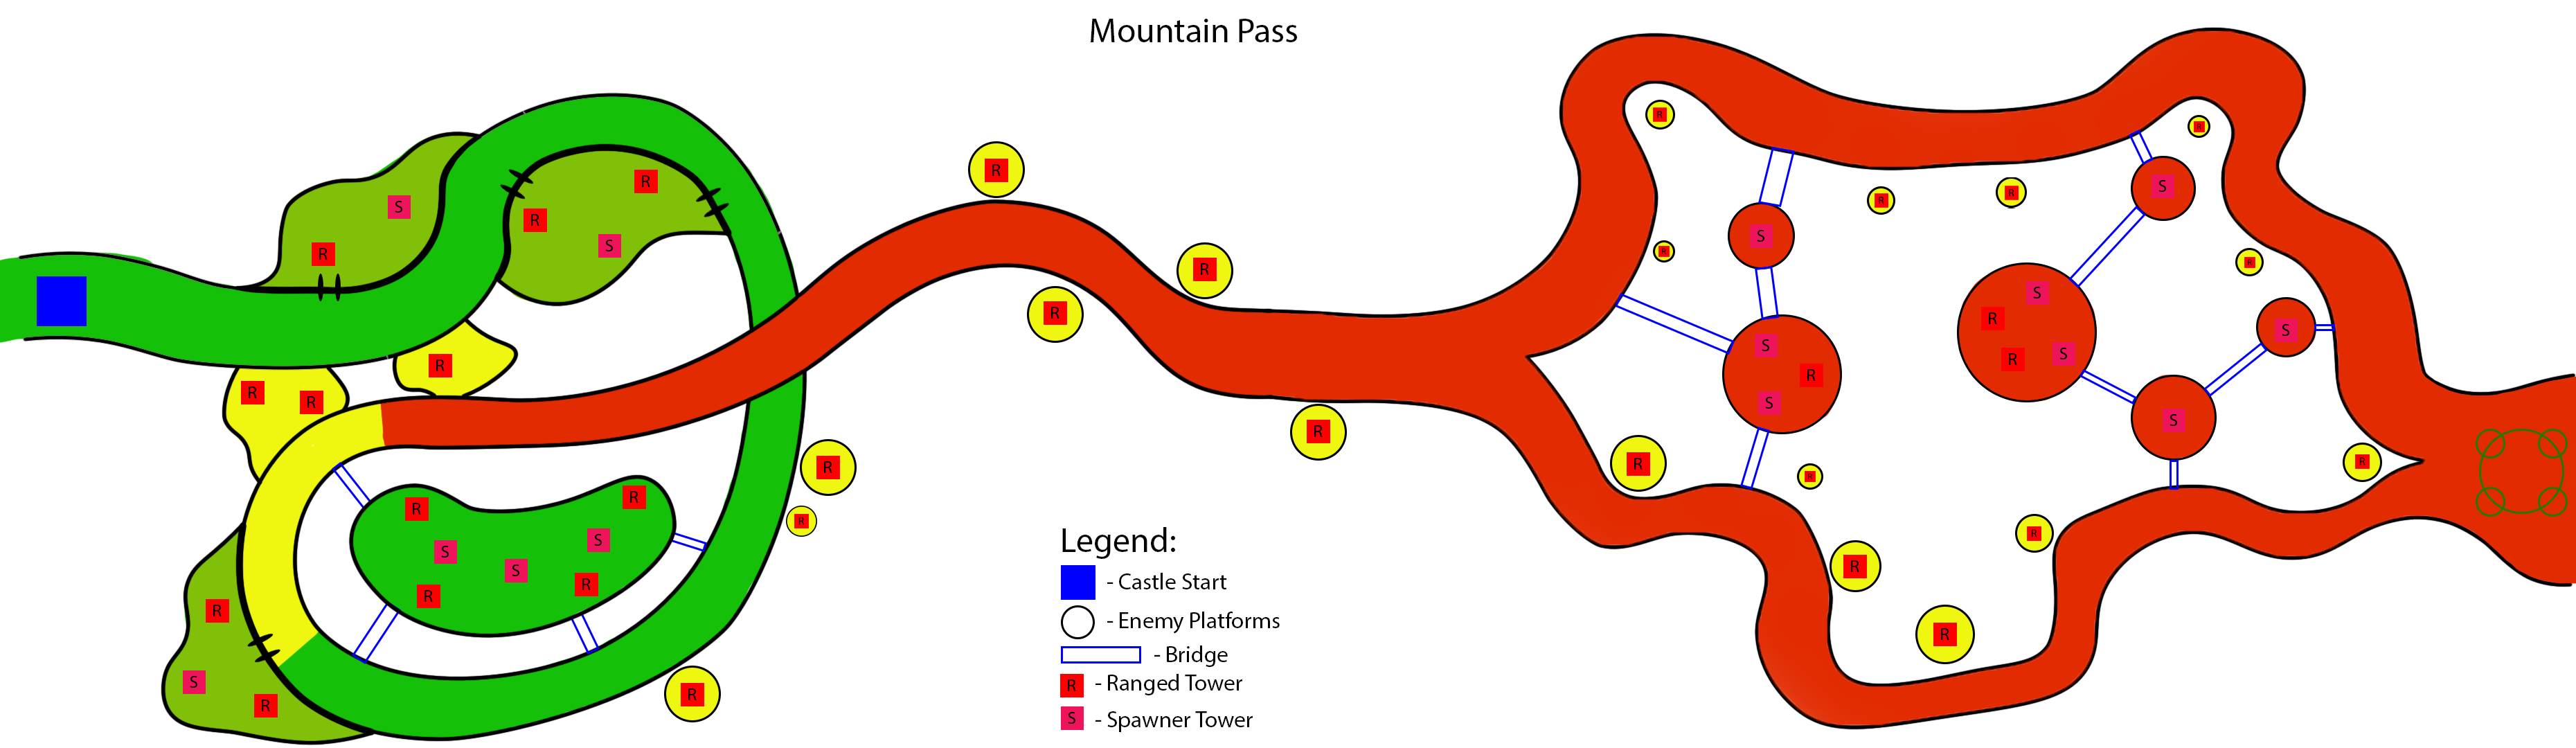 Level 6 - Mountain Pass